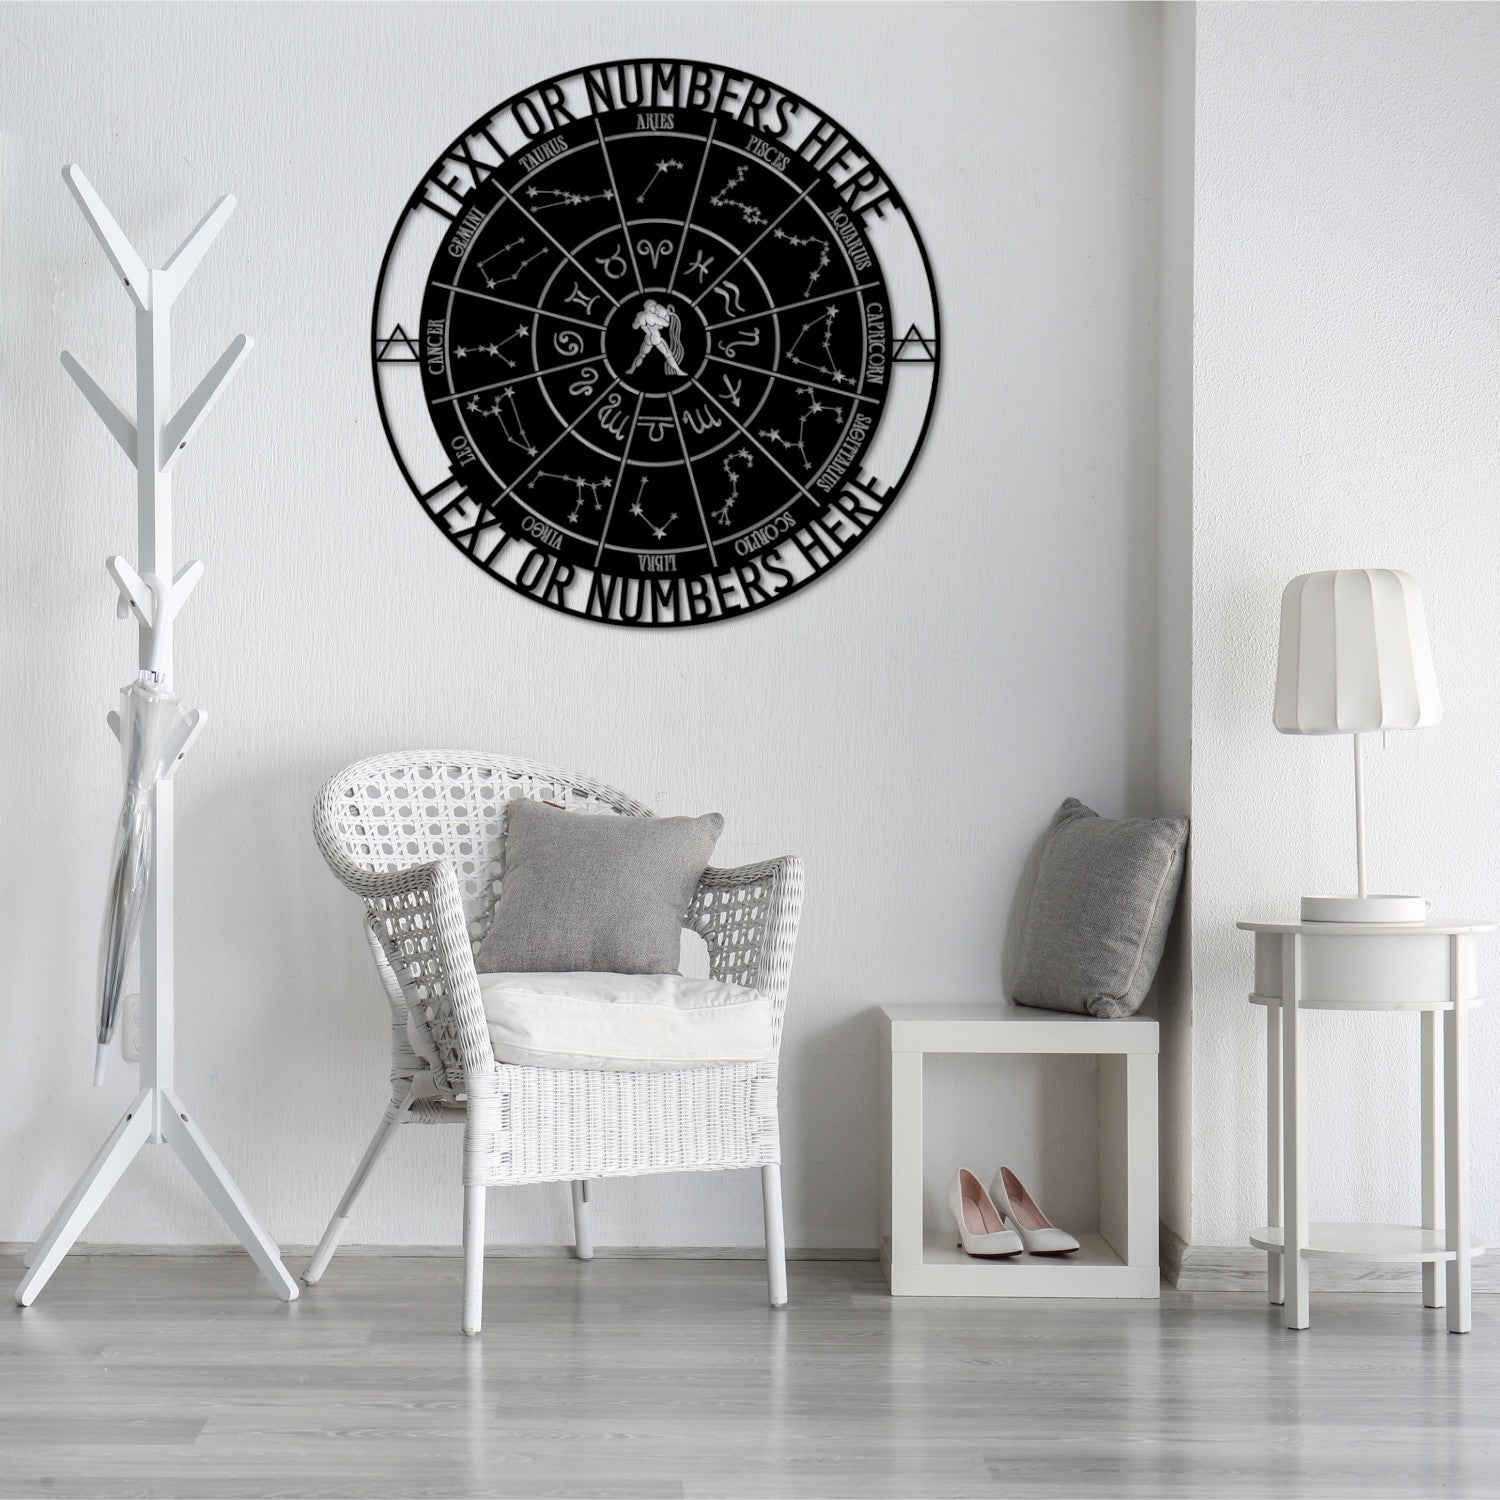 Personalized Aquarius Zodiac Wheel Name Metal Sign. Custom Made Astrology Wall Decor. Celestial Gifts. Decorative Aquarius Star Sign Hanging